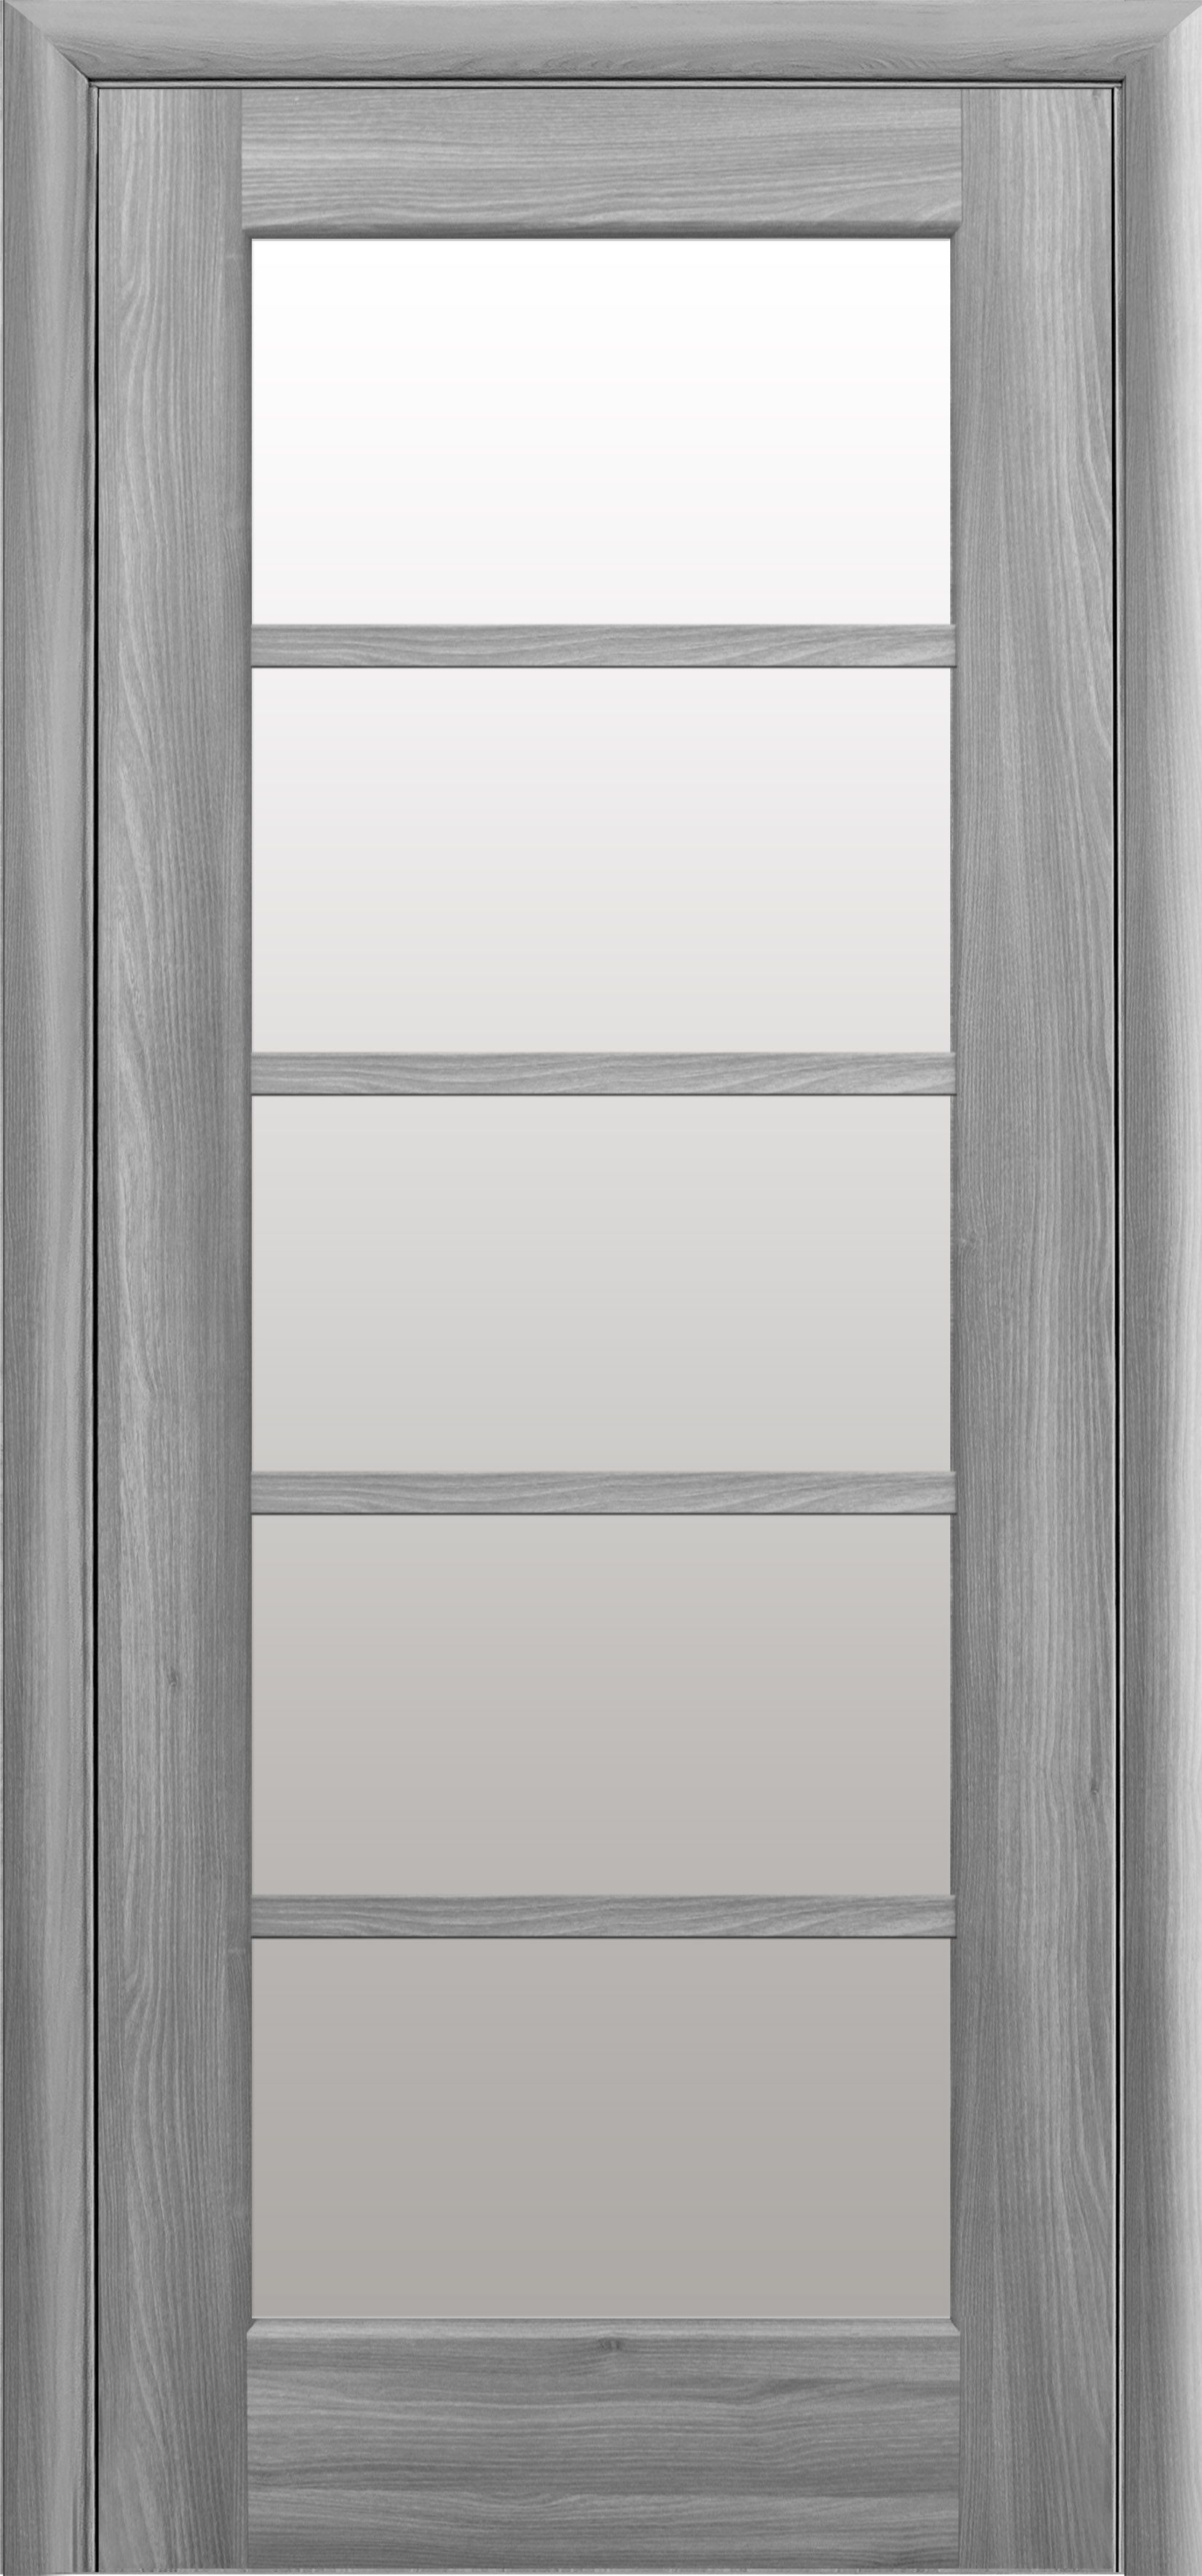 Межкомнатные двери Муза со стеклом сатин